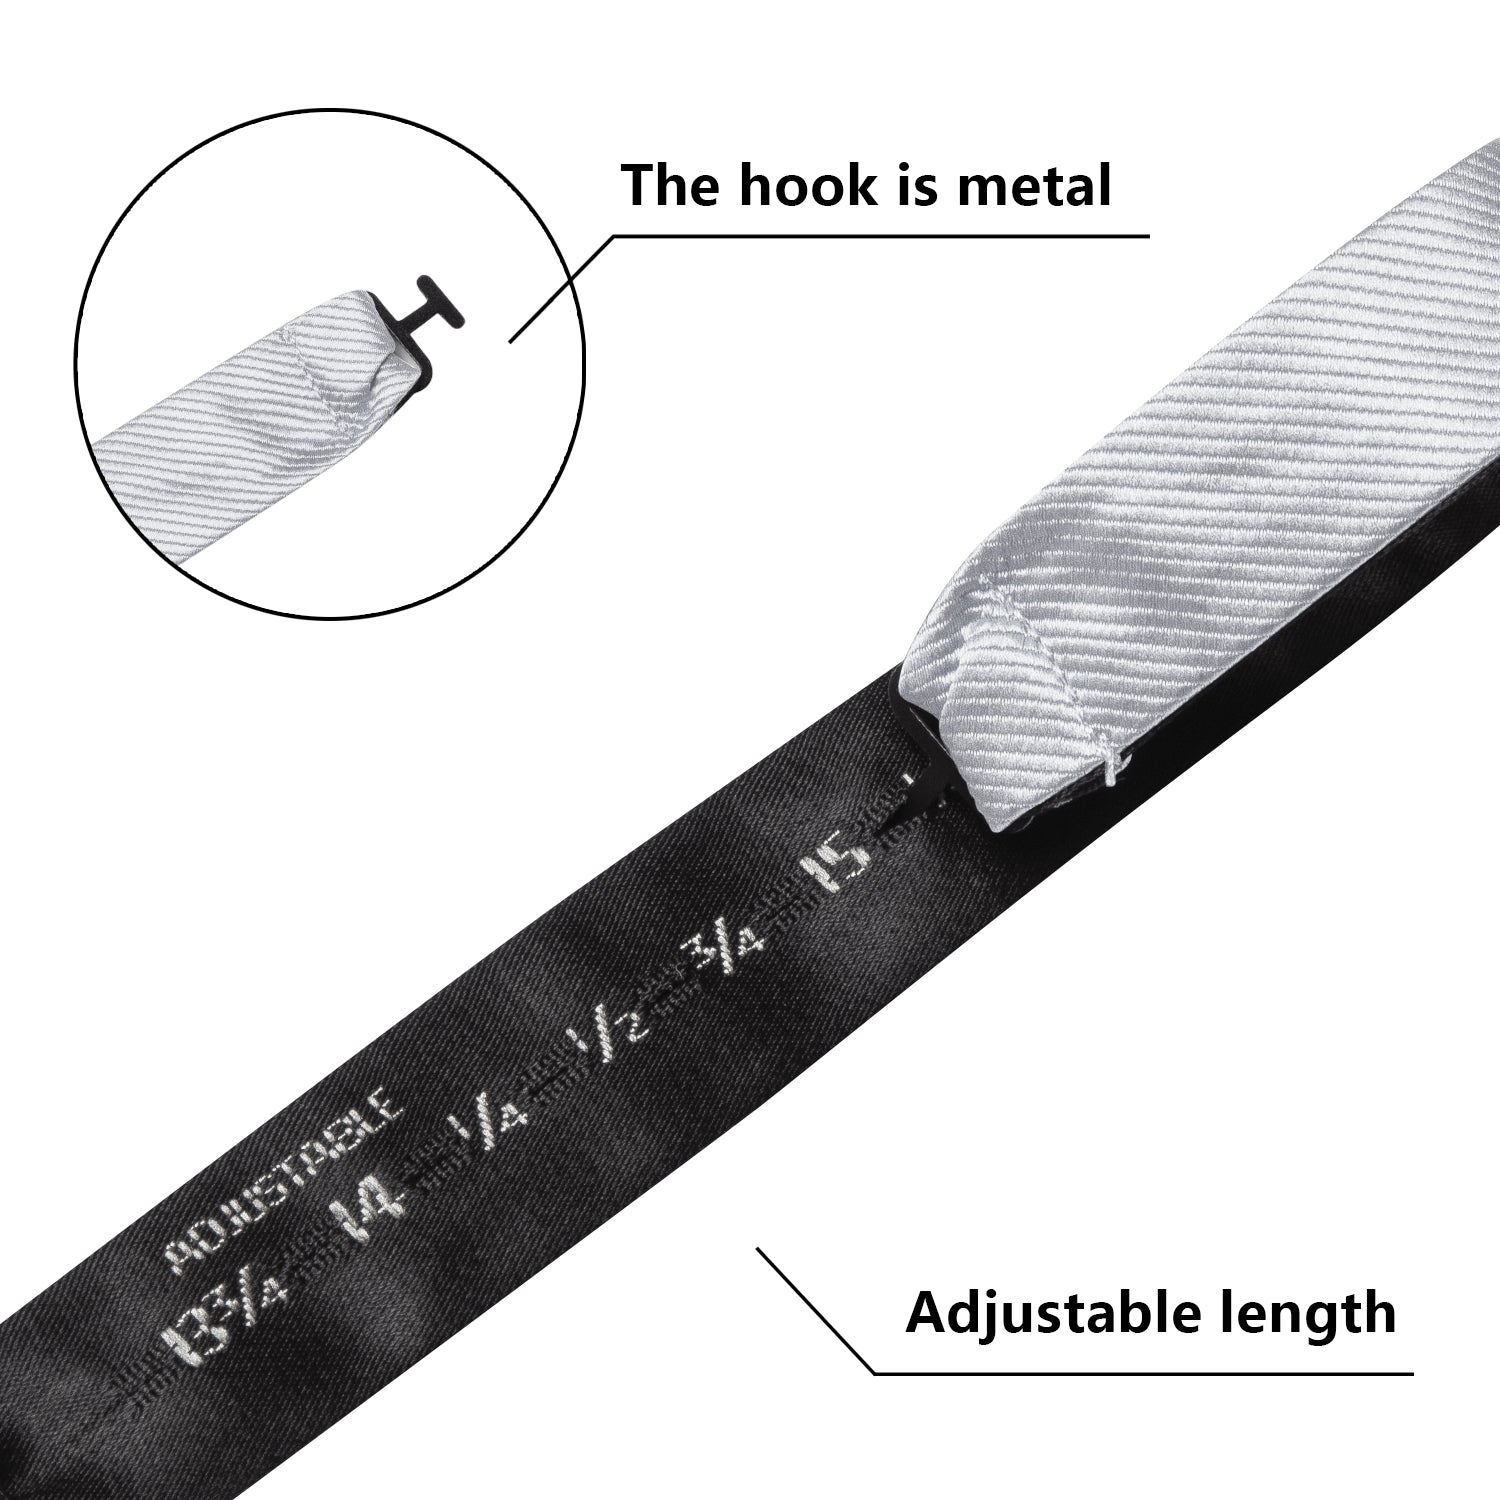 Silver Striped Silk Self-tied Bow Tie Pocket Square Cufflinks Set